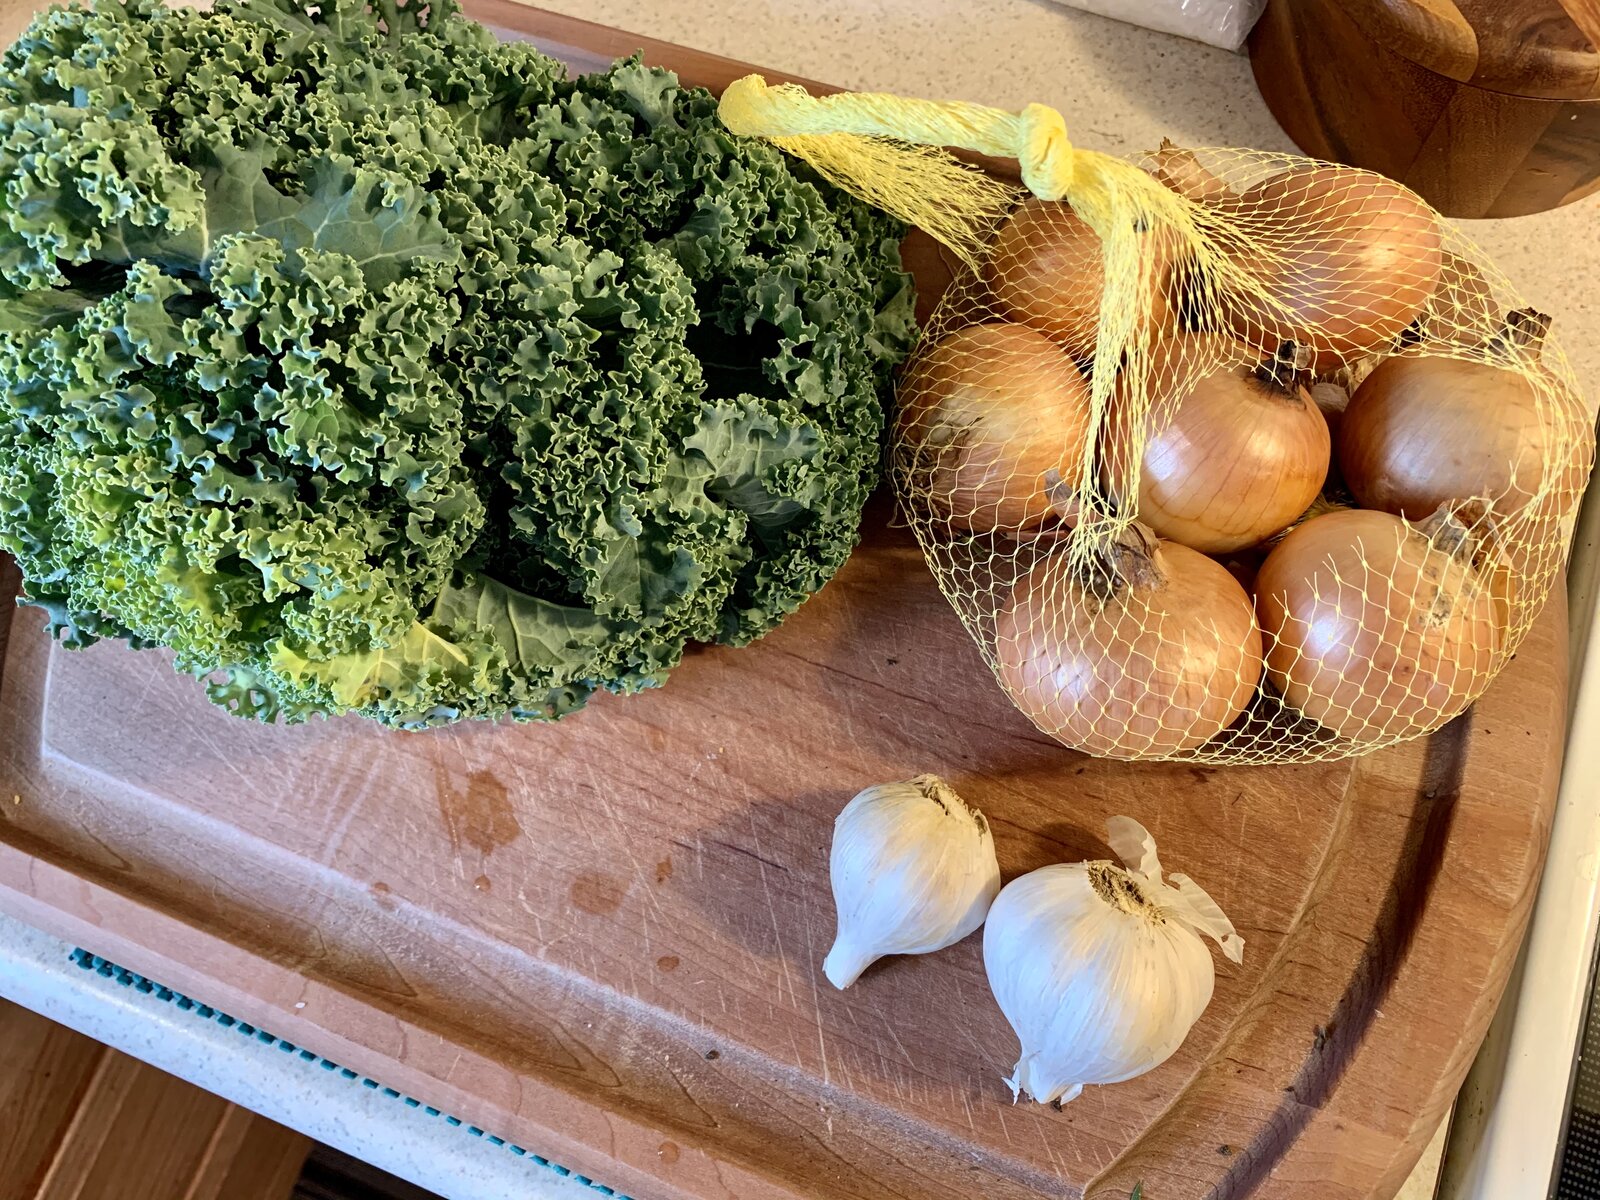 Onions, Garlic, & Kale